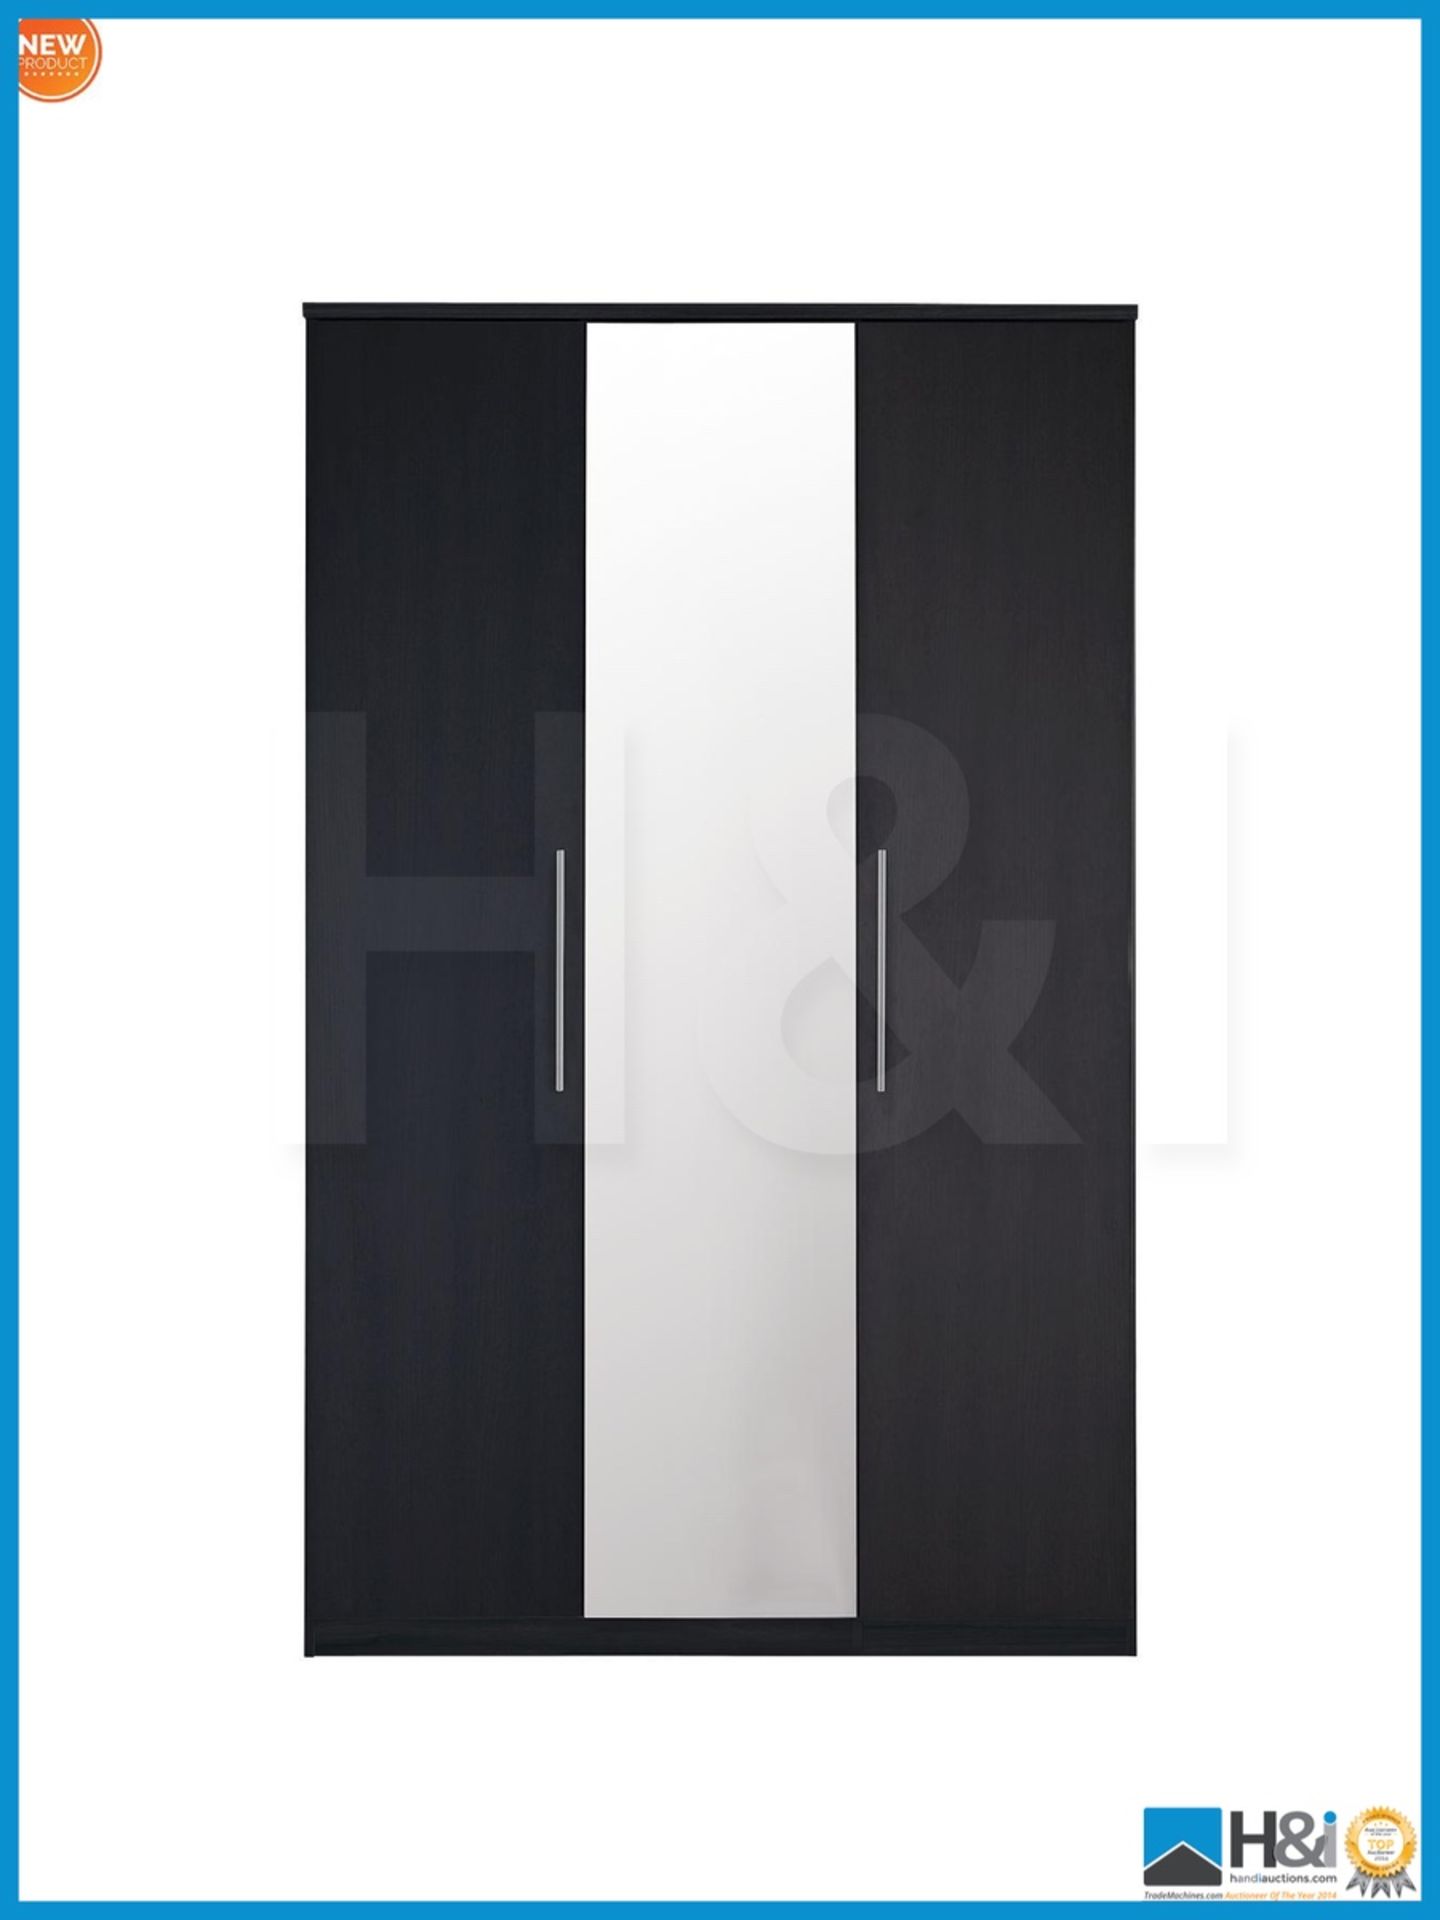 NEW IN BOX PRAGUE 3DOOR WARDROBE [BLACK] 201 x 123 x 53cm RRP £376 Appraisal: Viewing Essential